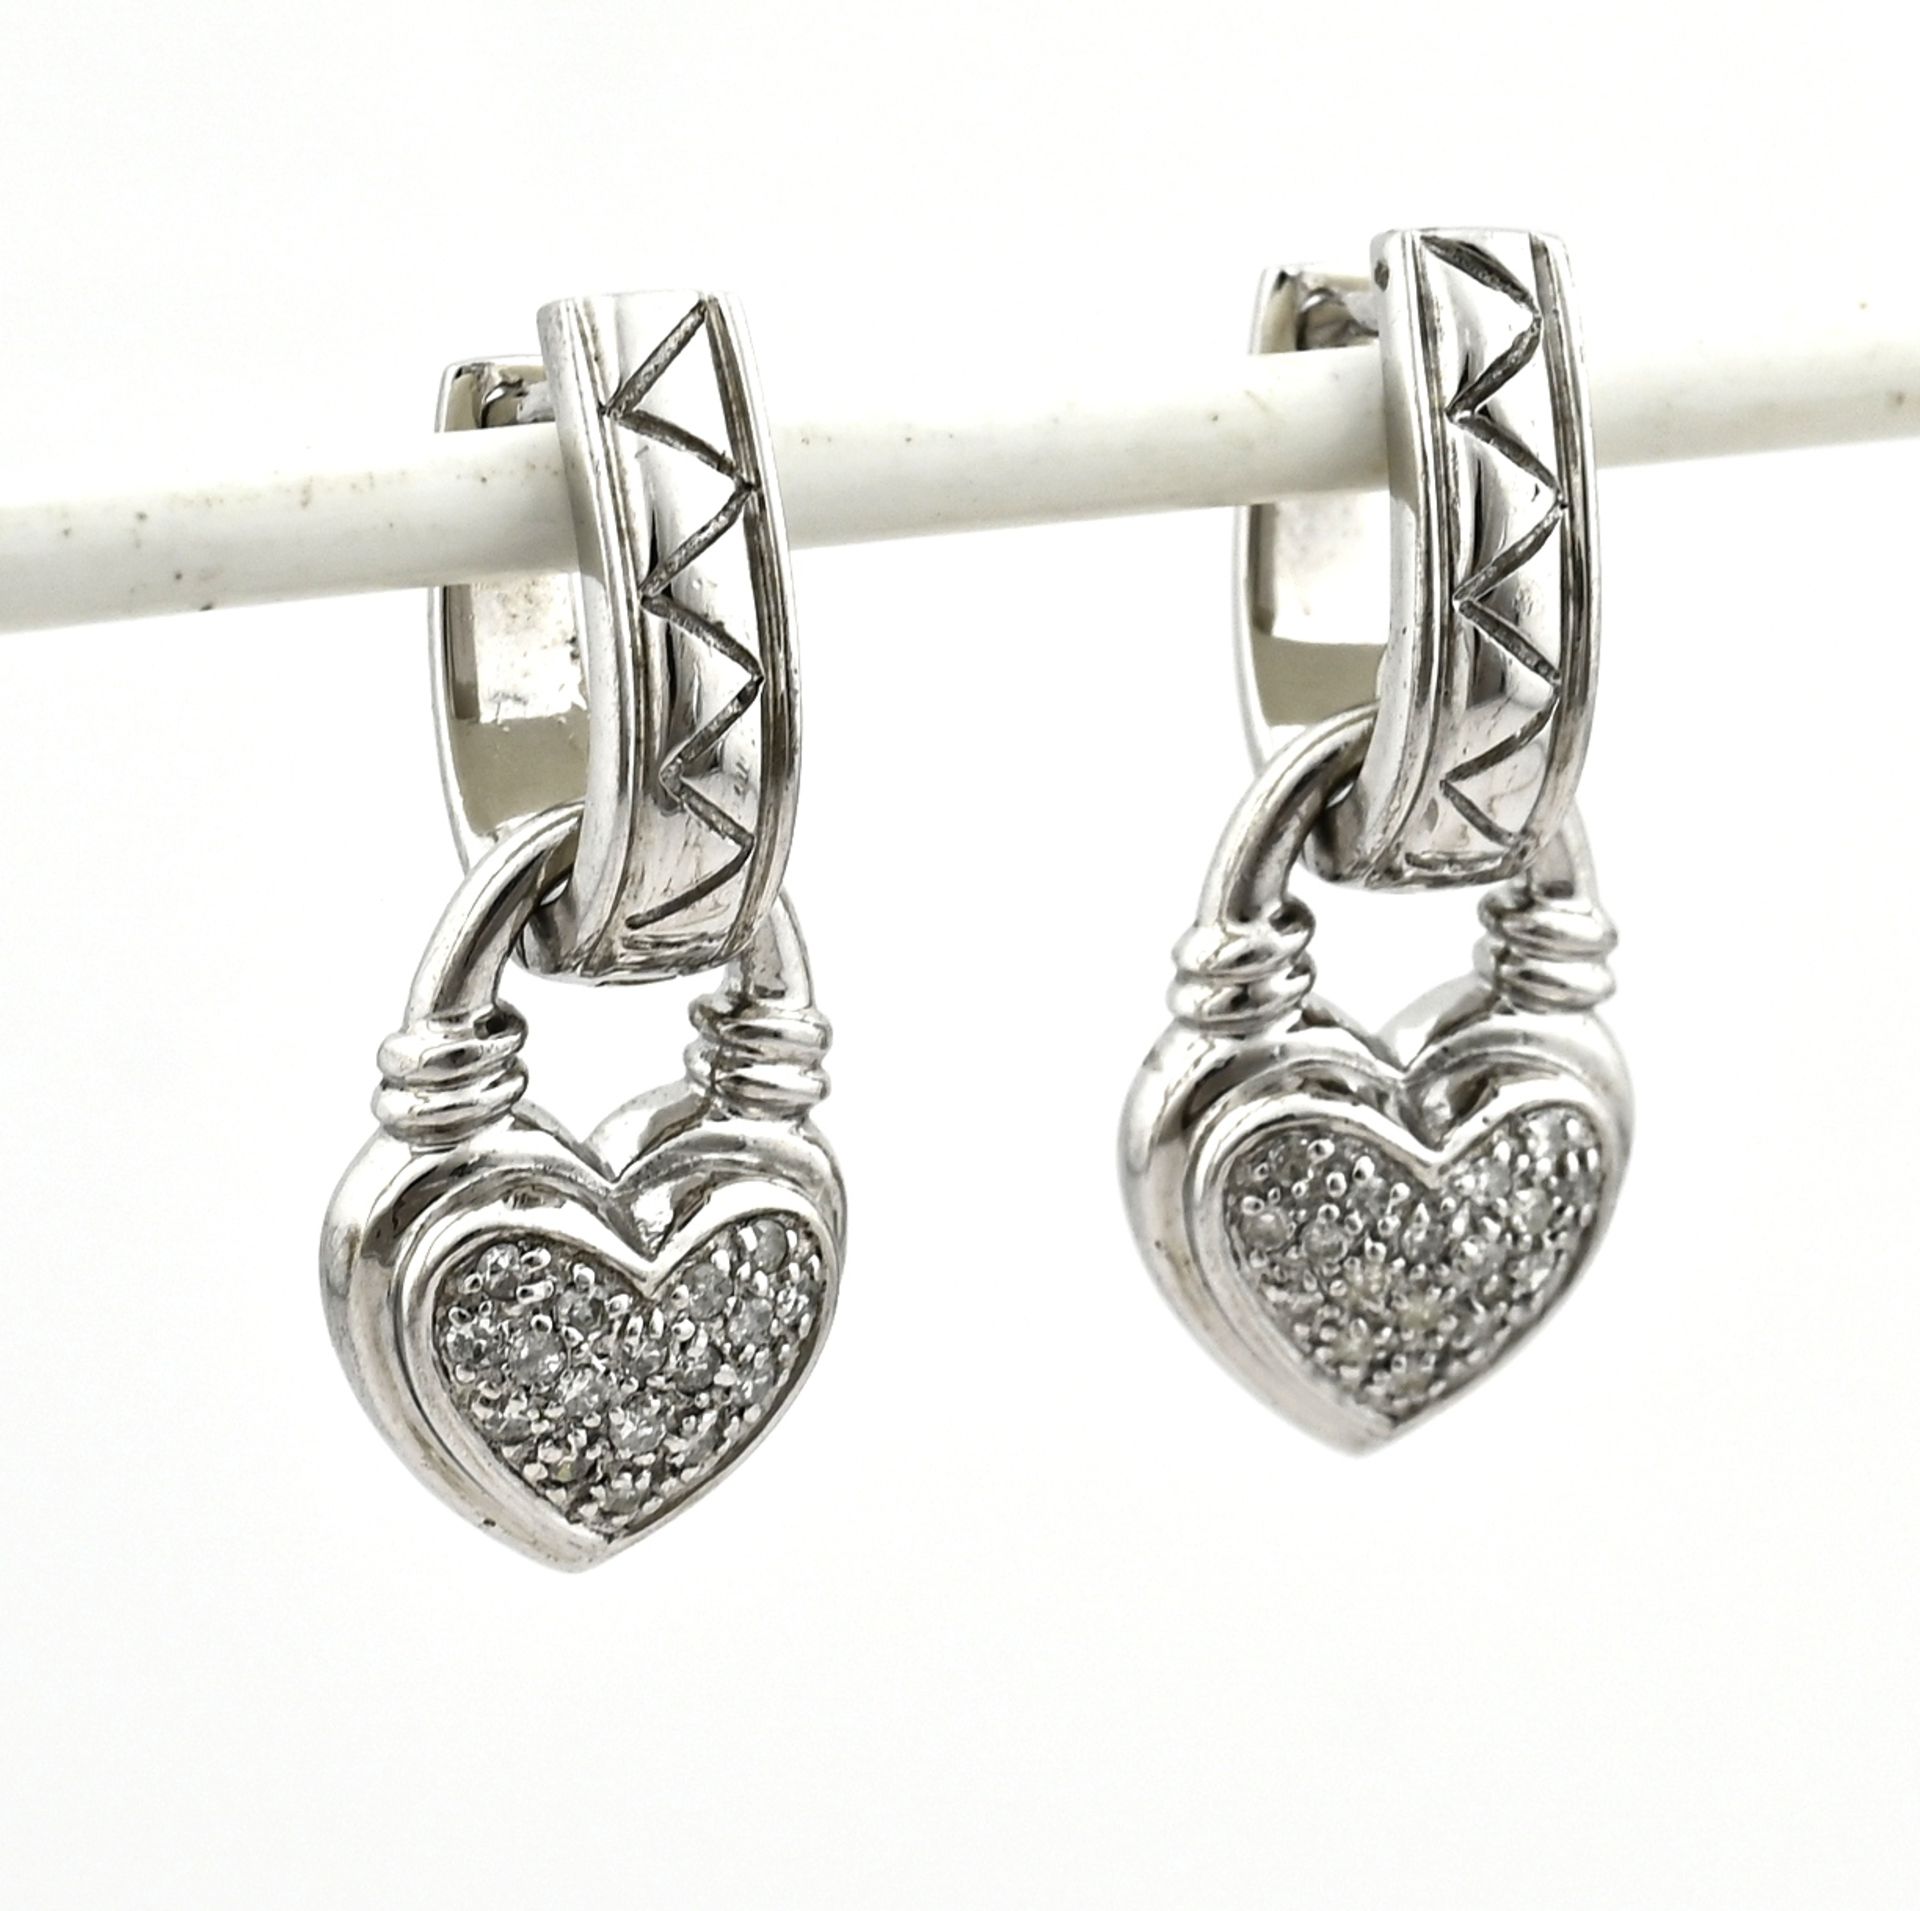 Silver hoop earrings with heart pendants with diamonds